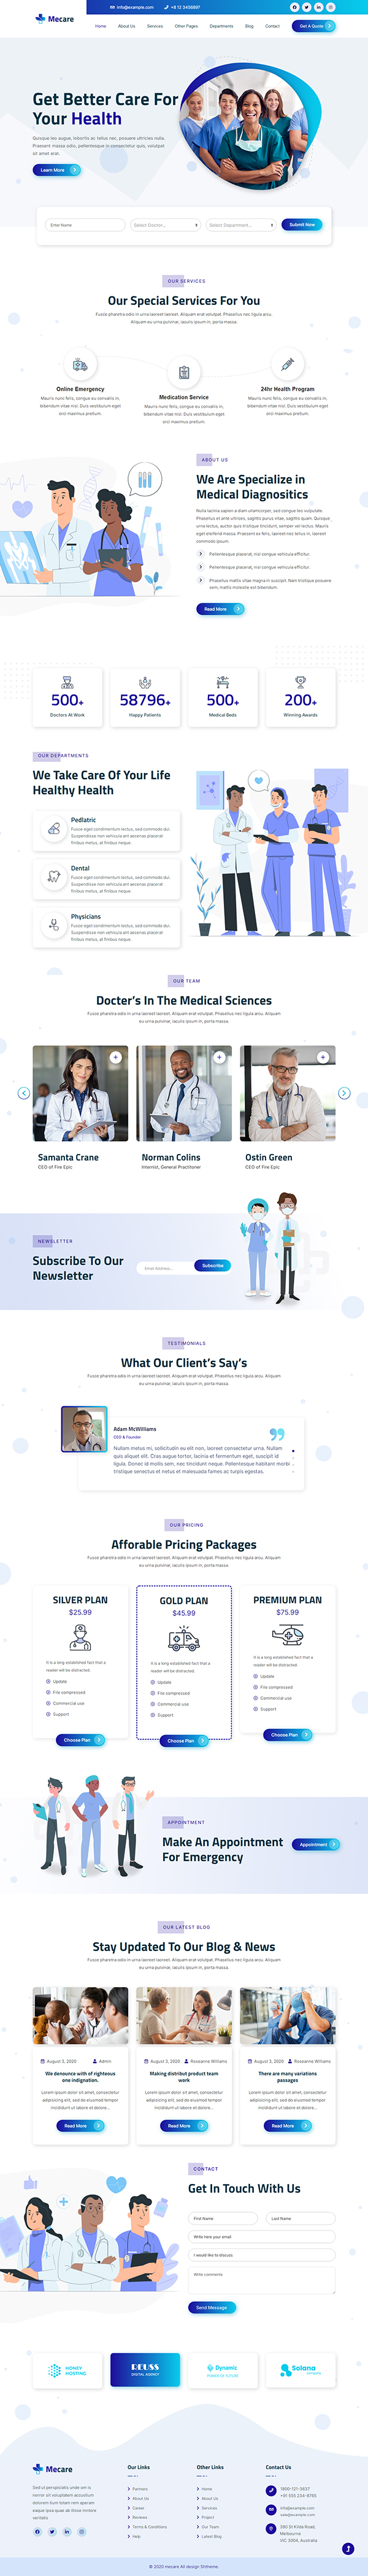 Mecare – Hospital and Health WordPress Theme